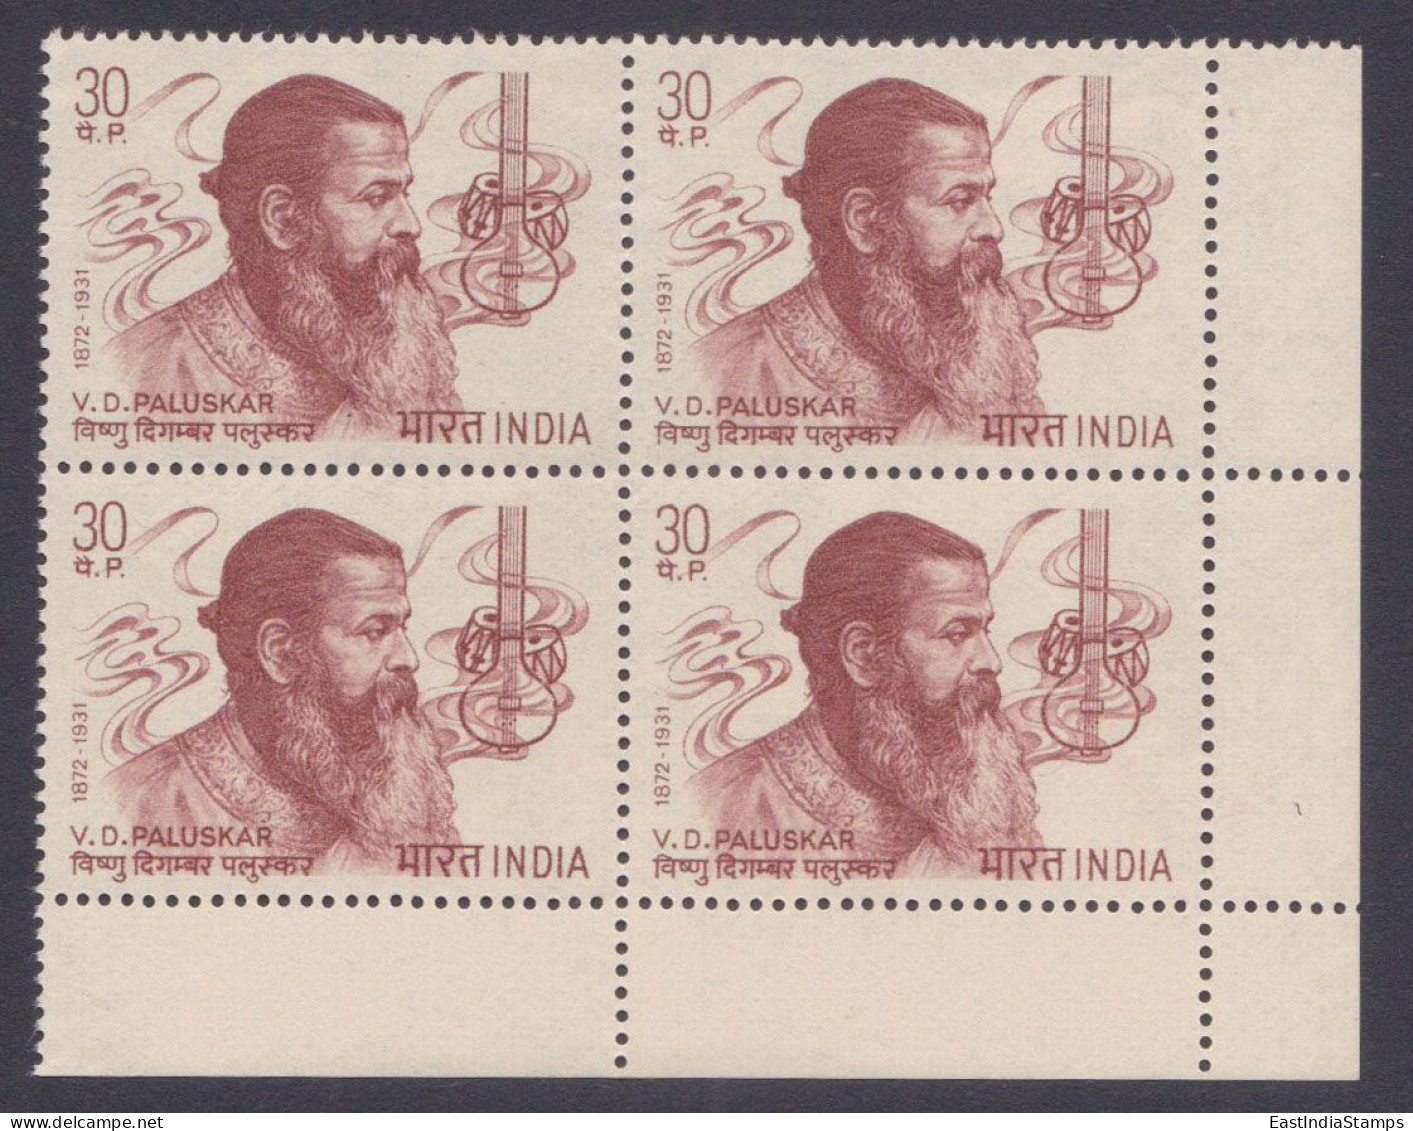 Inde India 1973 MNH V.D. Paluskar, Hindustani Musician, Music, Arts, Art, Artist, Sitar, Tabla, Musical Instrument Block - Ungebraucht